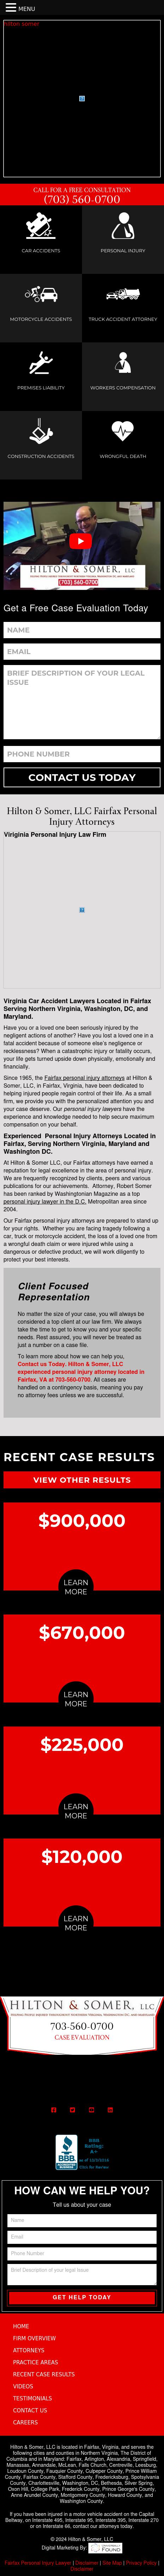 Hilton & Somer, LLC - Fairfax VA Lawyers